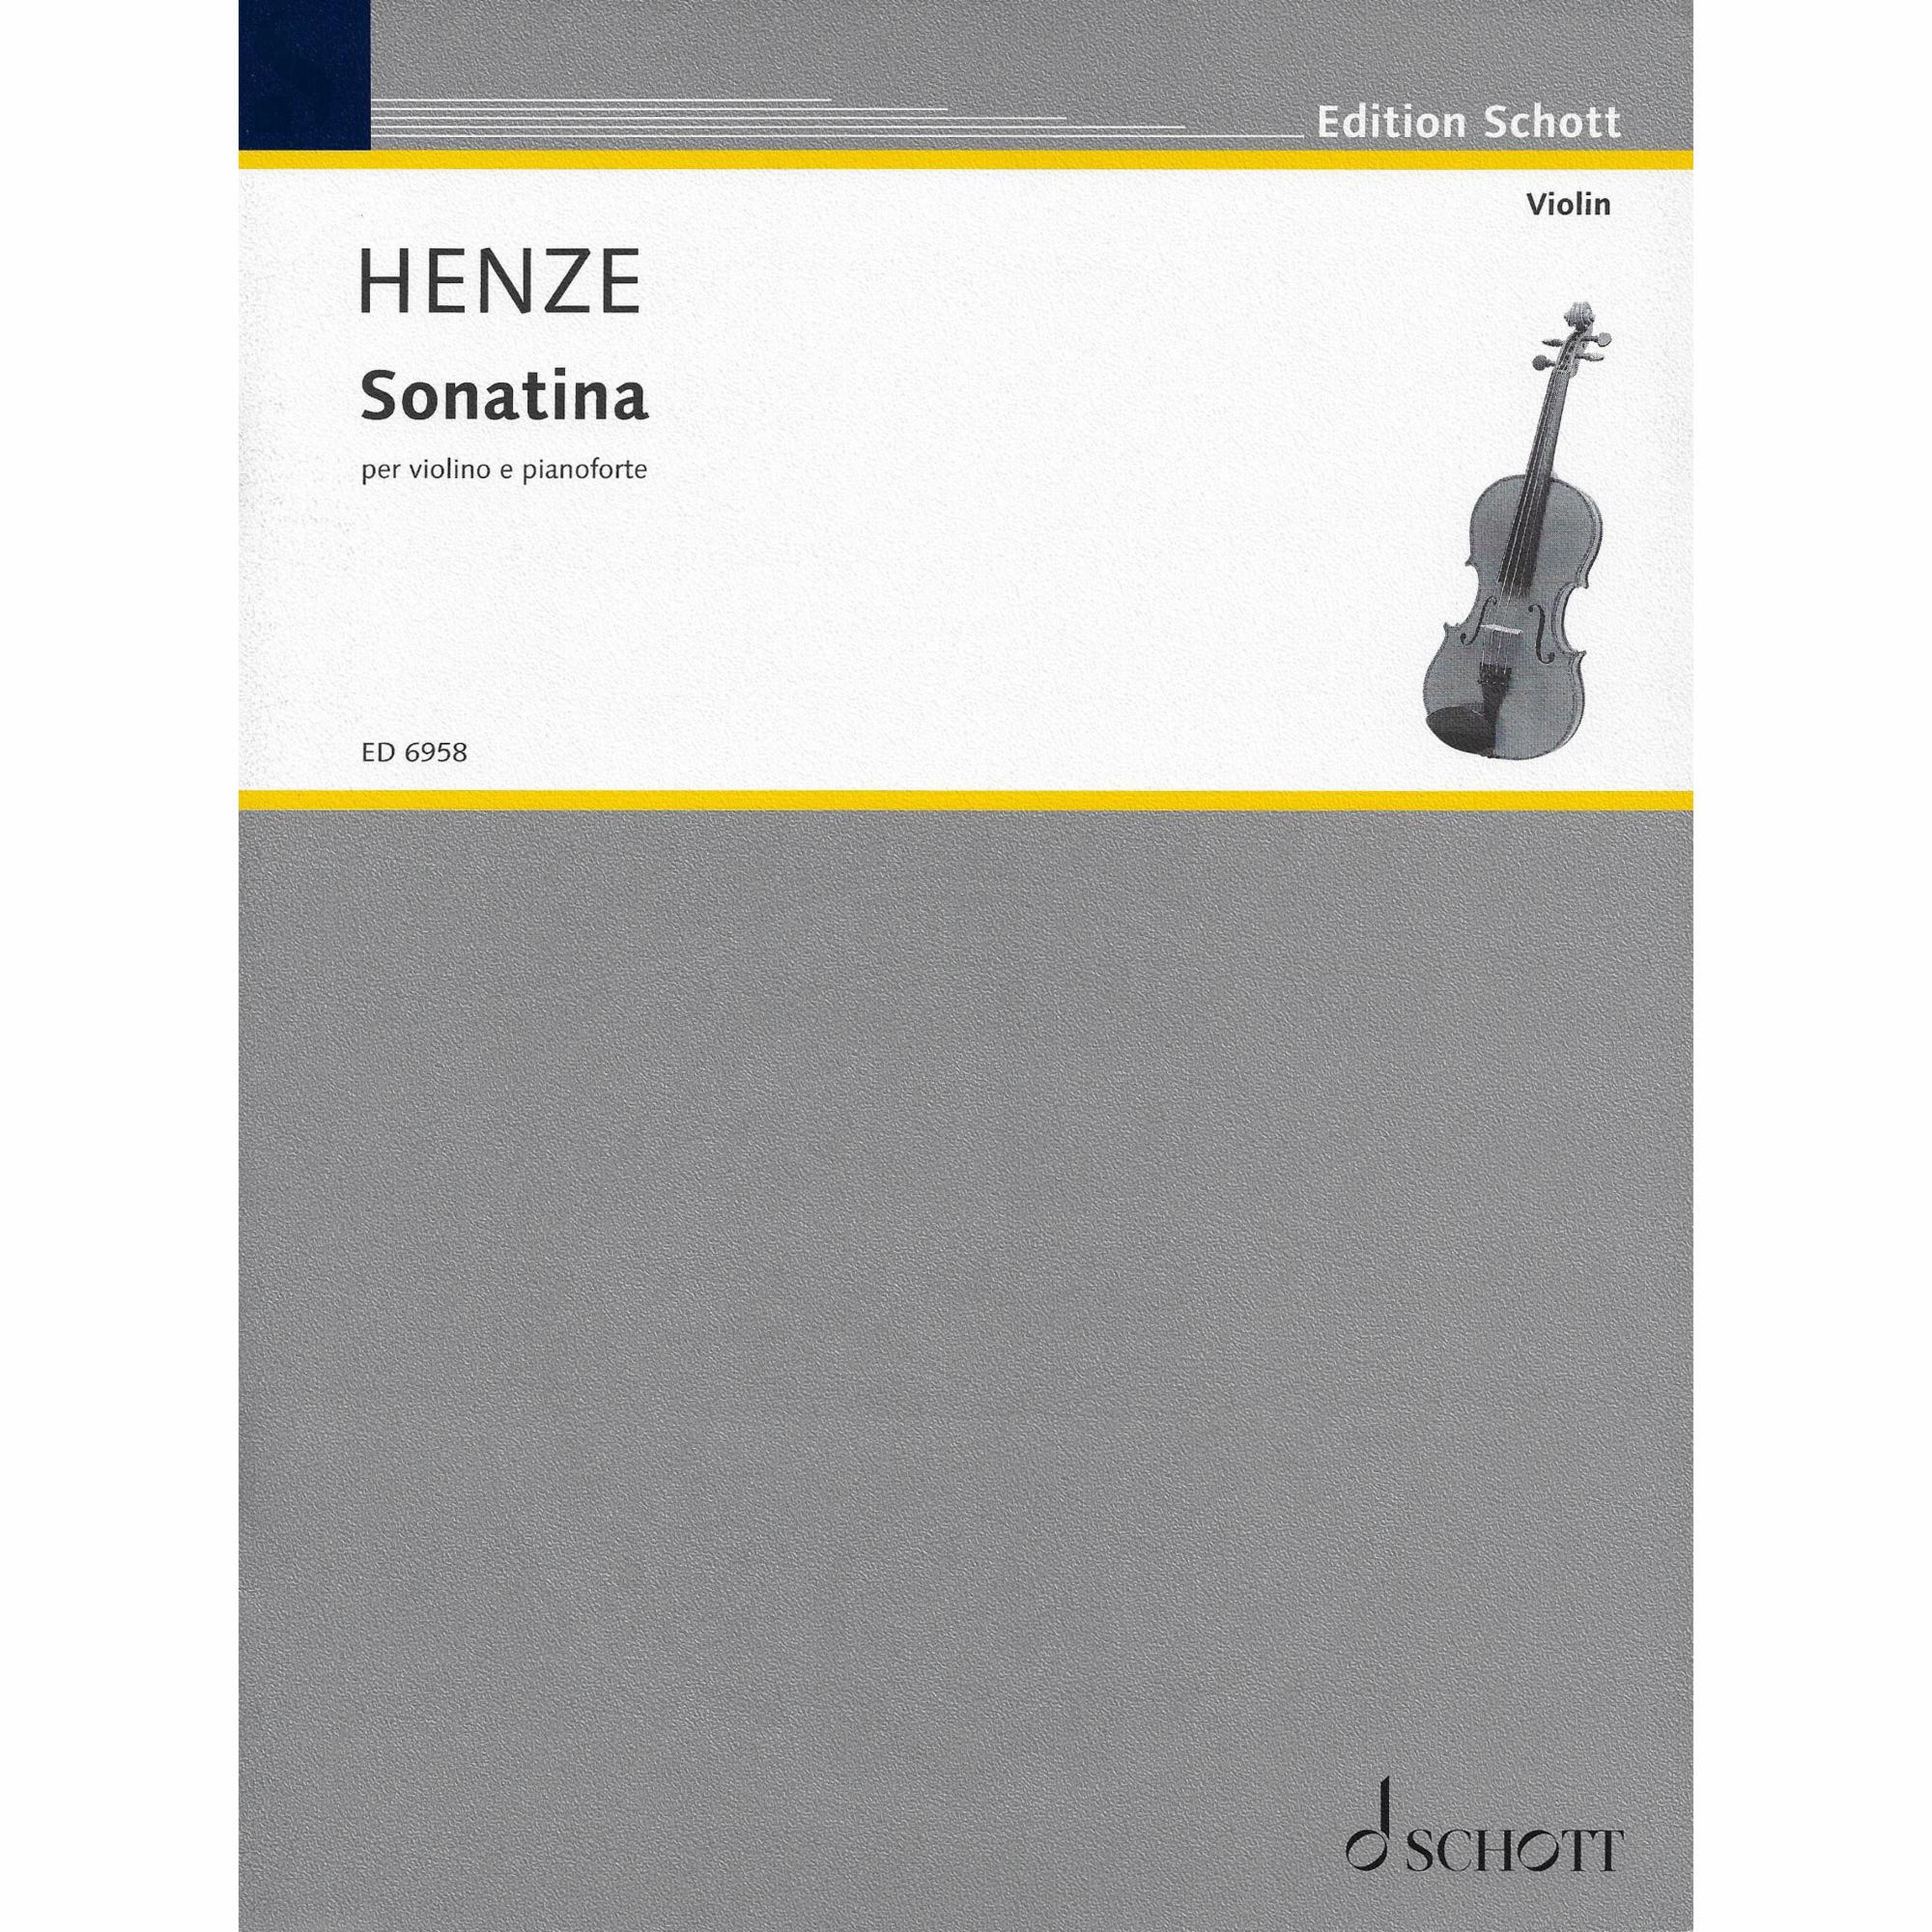 Henze - Sonatina for Violin and Piano